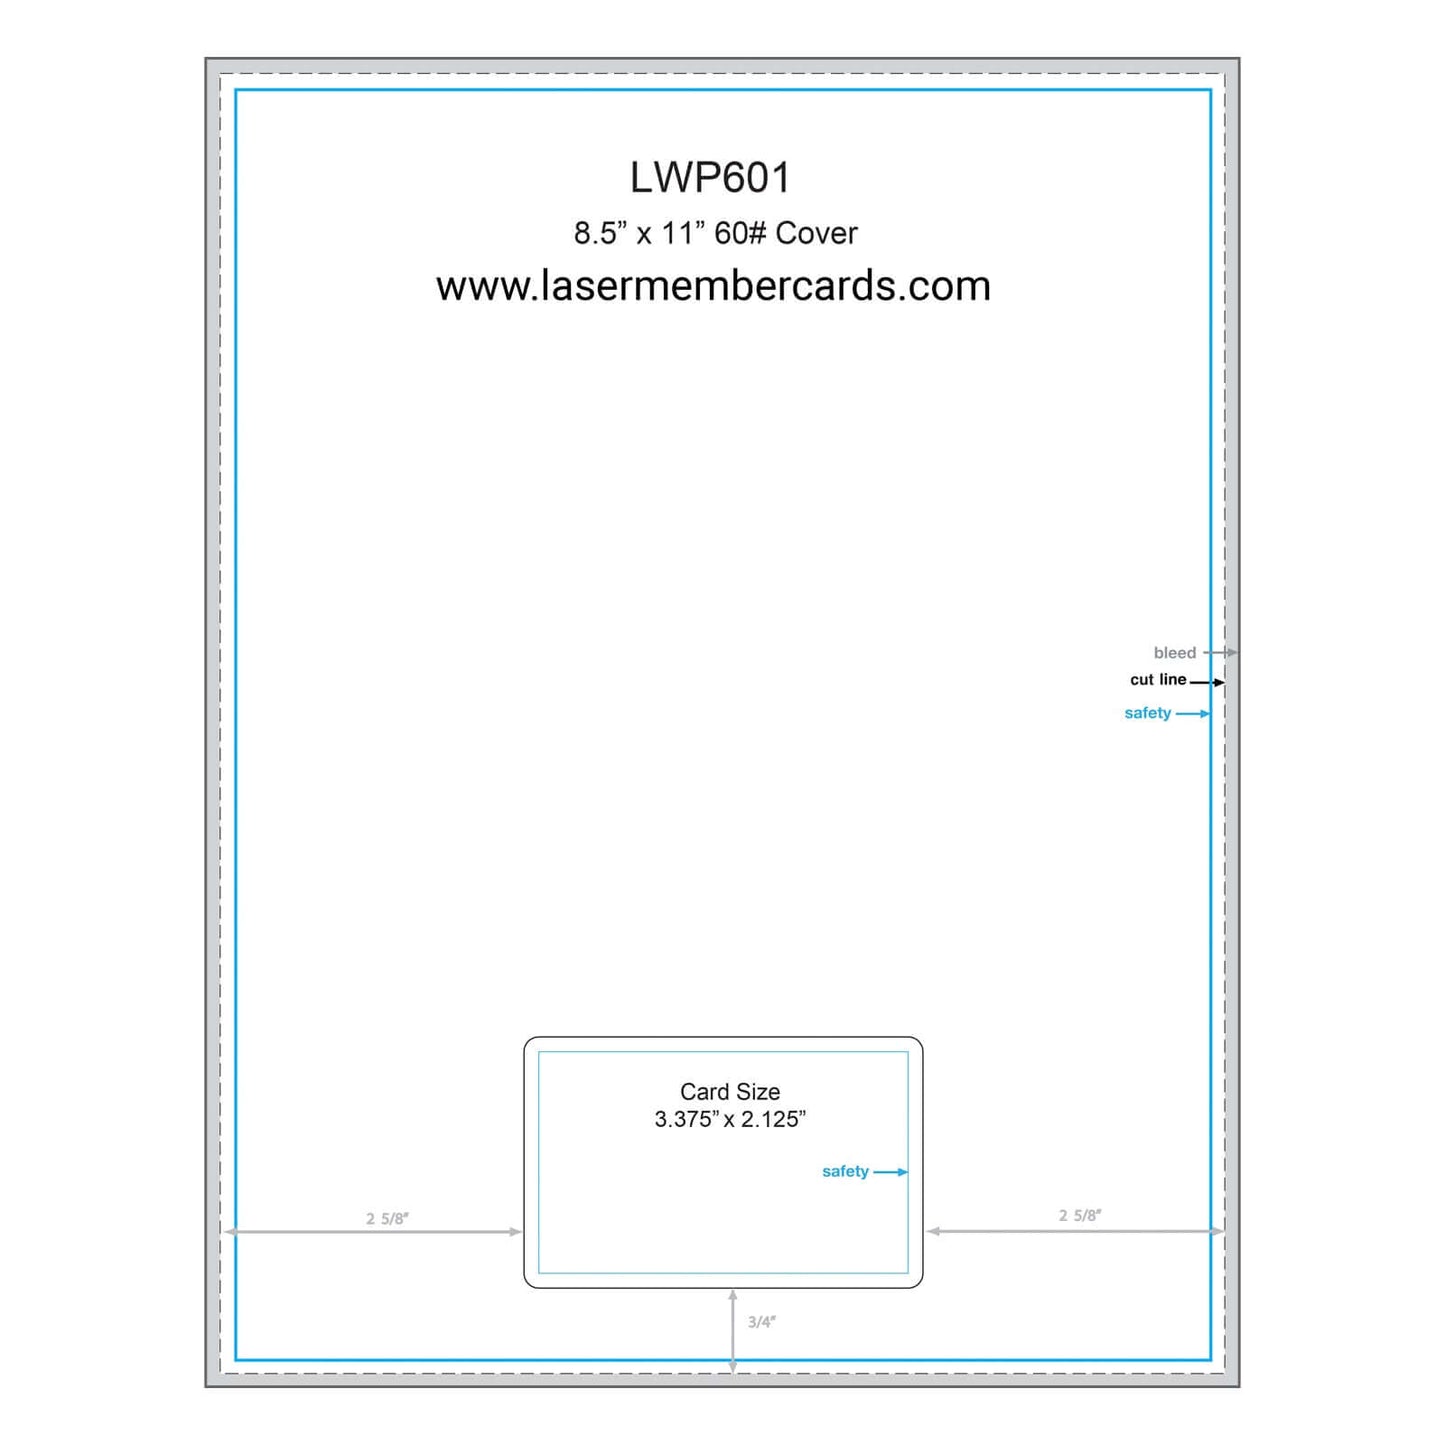 LWP601 Laser Membership Cards for Printers full sheet layout